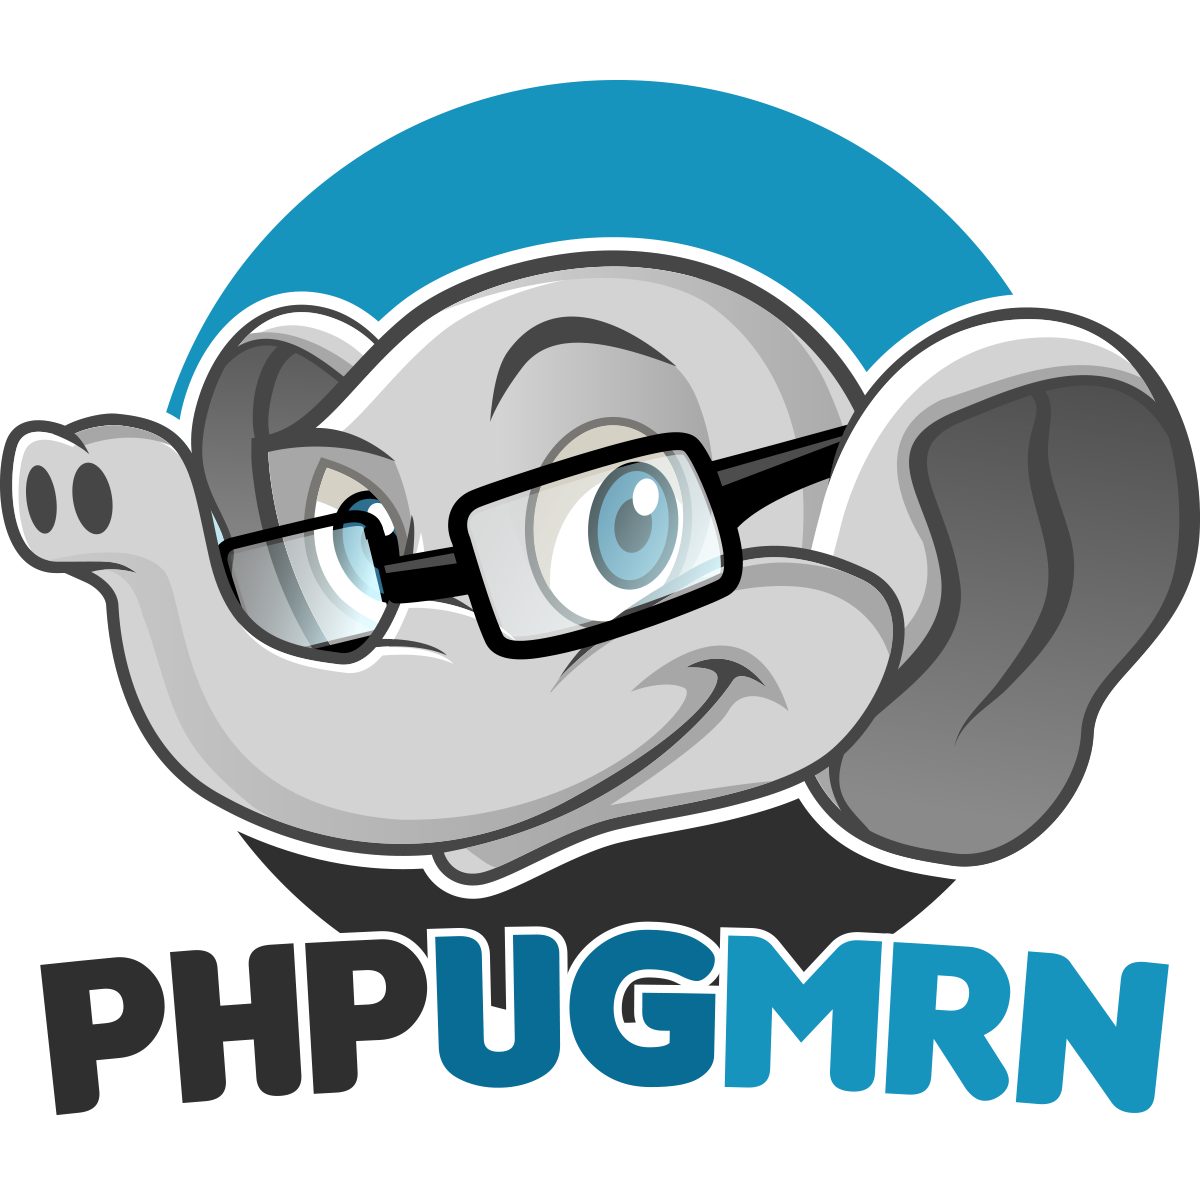 PHPUGMRN logo